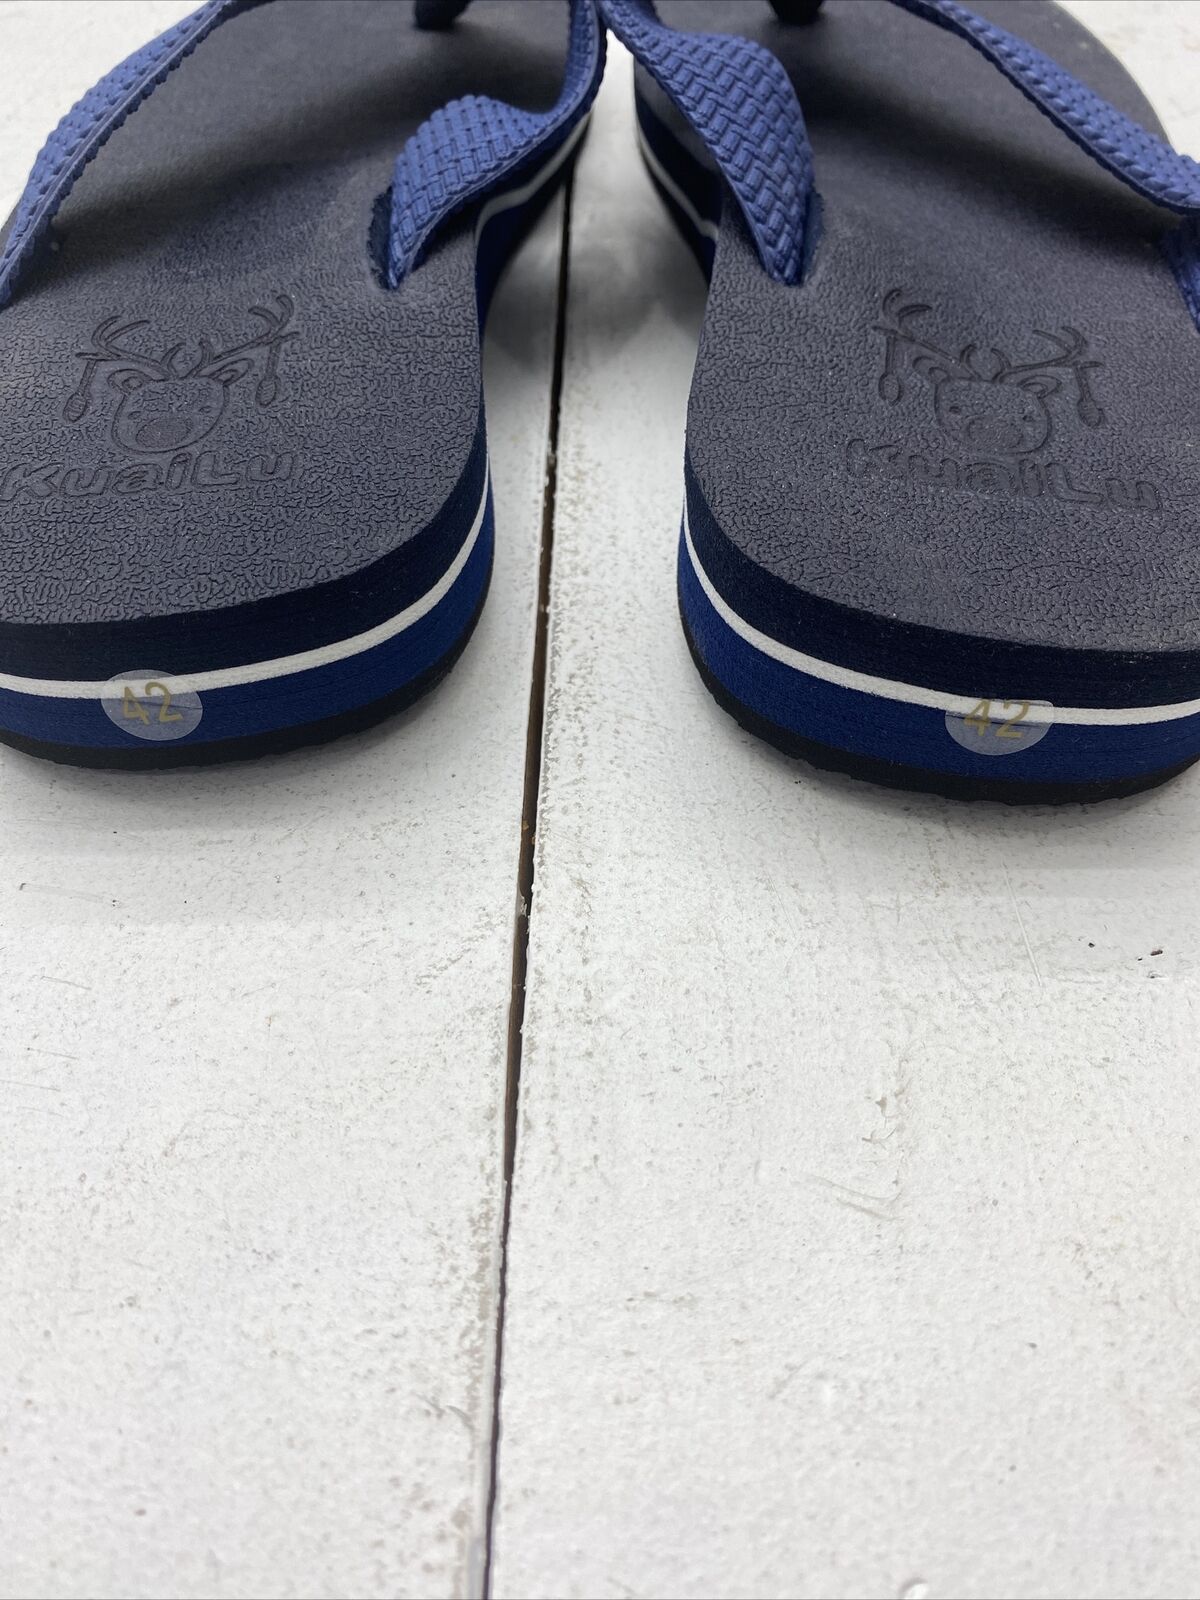 KuaiLu Navy Blue Yoga Mat Flip-Flops Men's EU Size 42 US Size 9